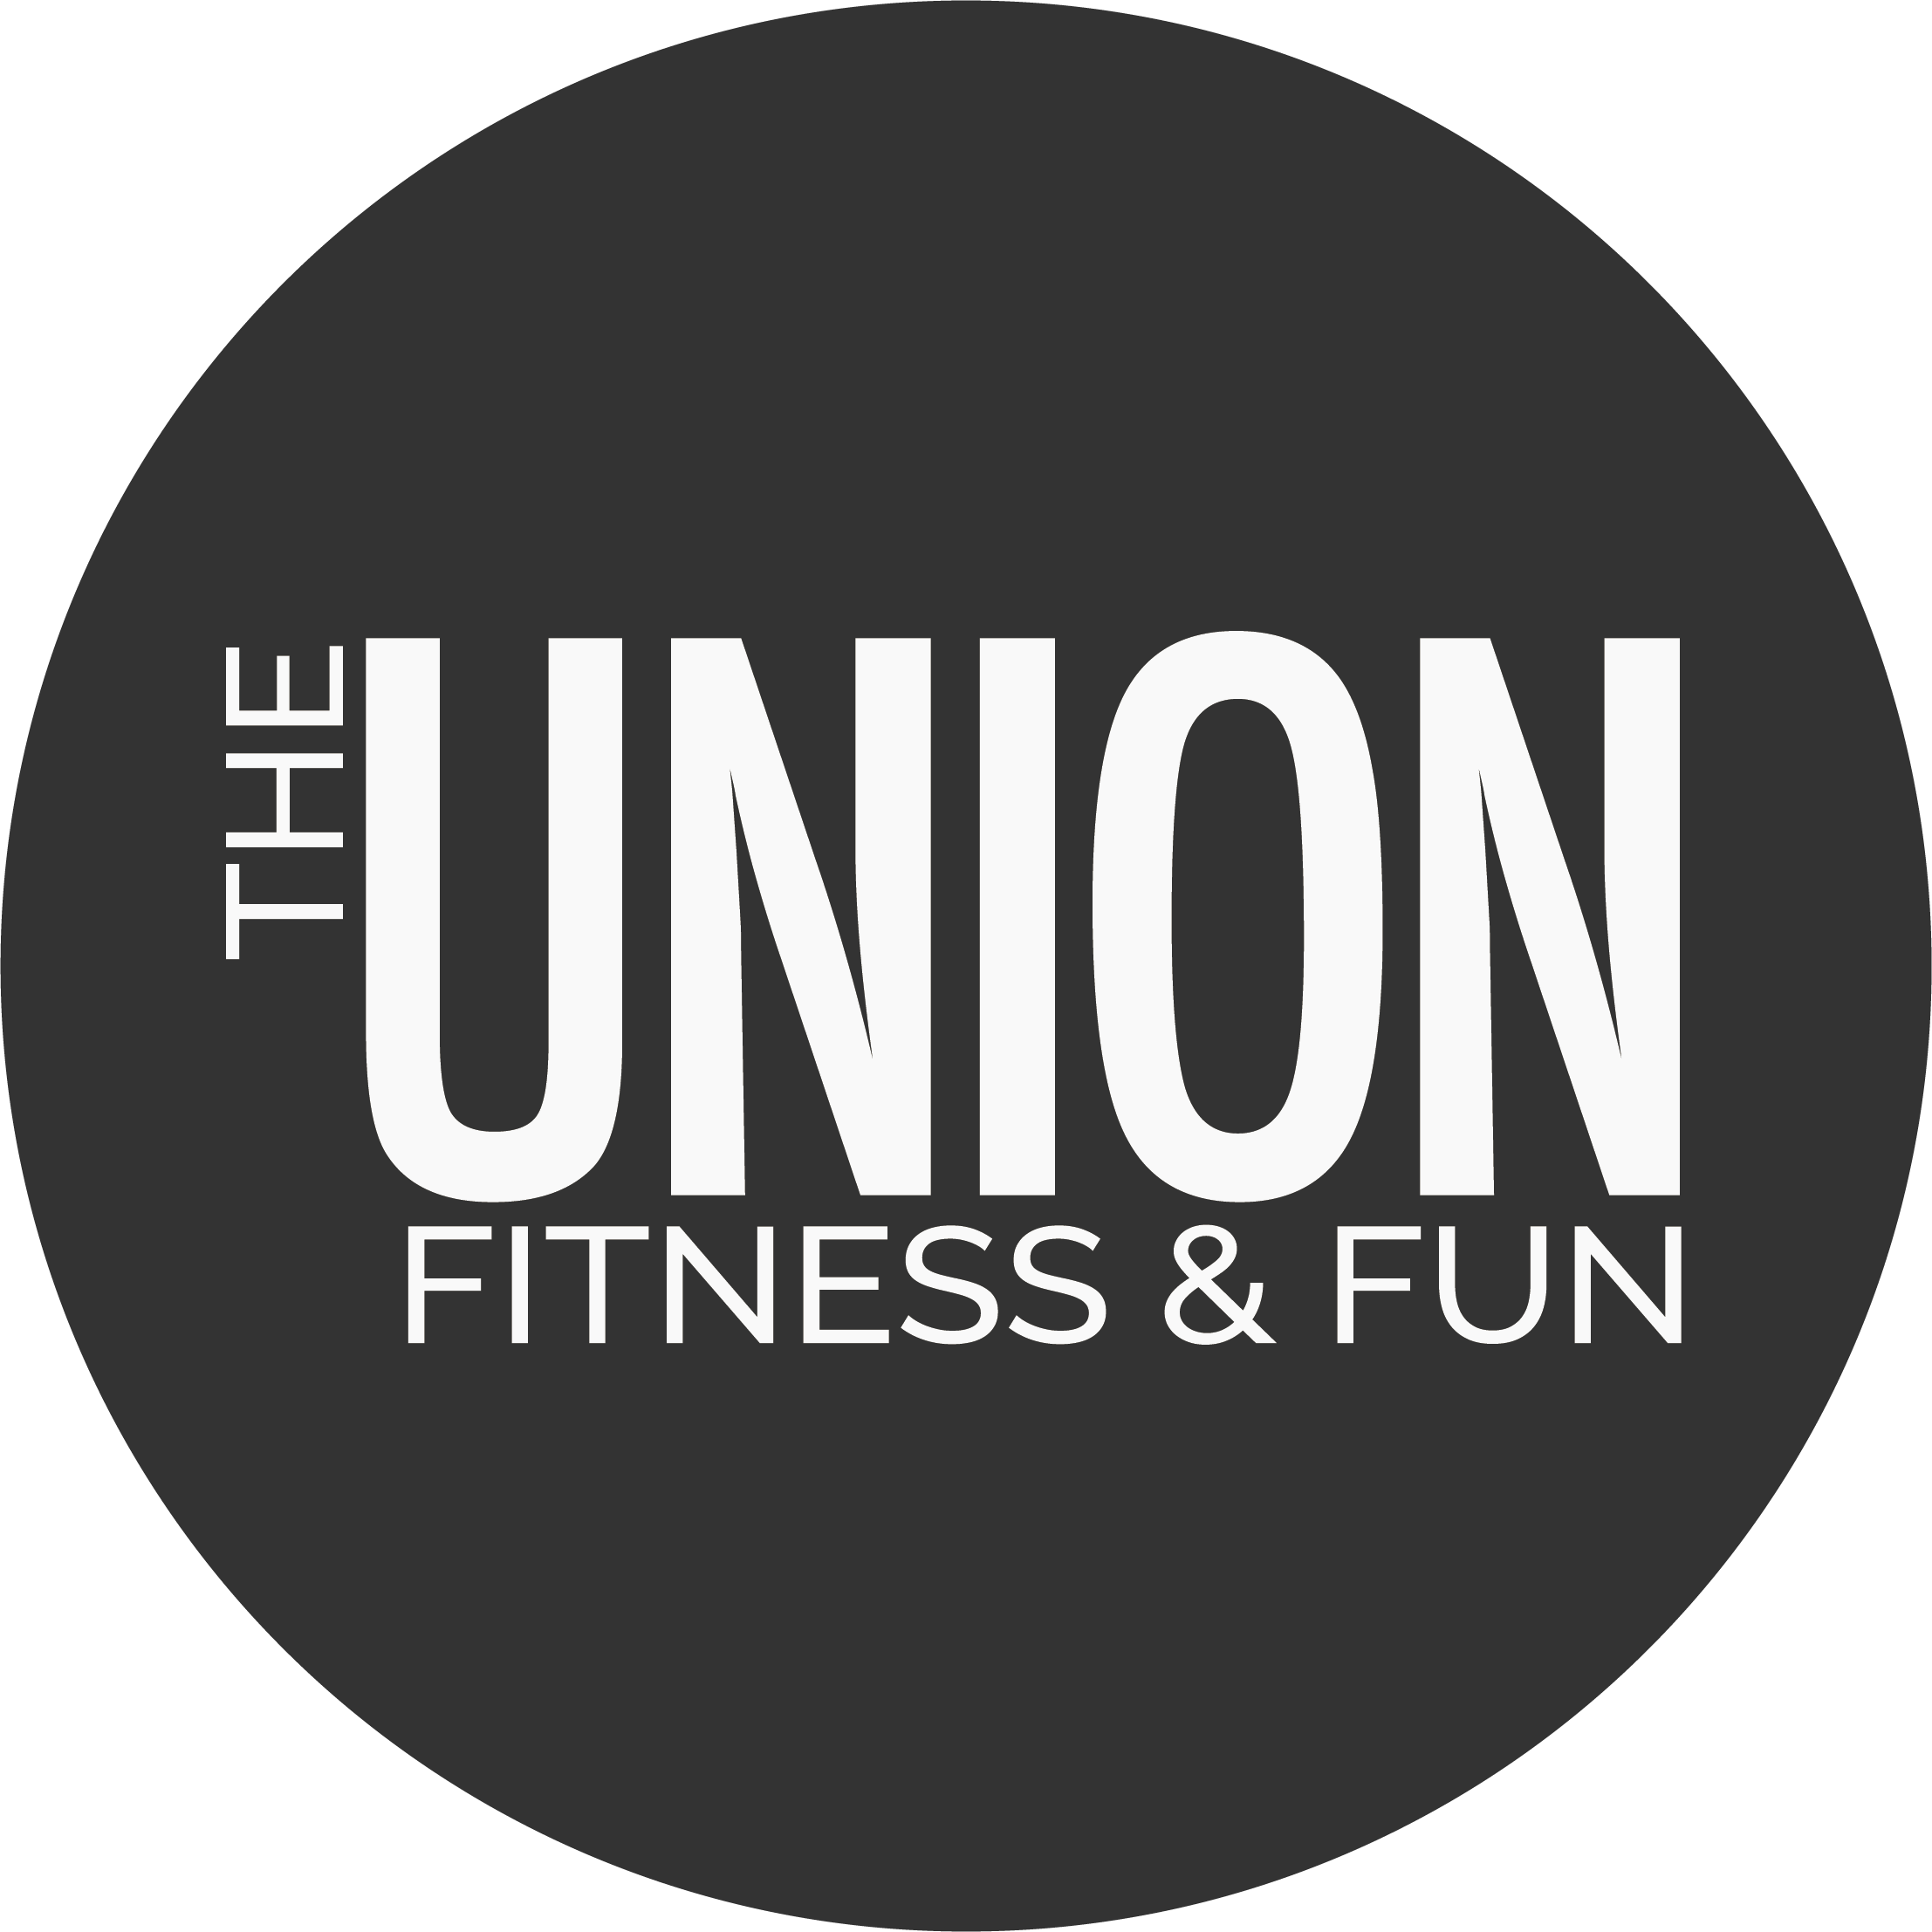 The Union, Fitness & Fun